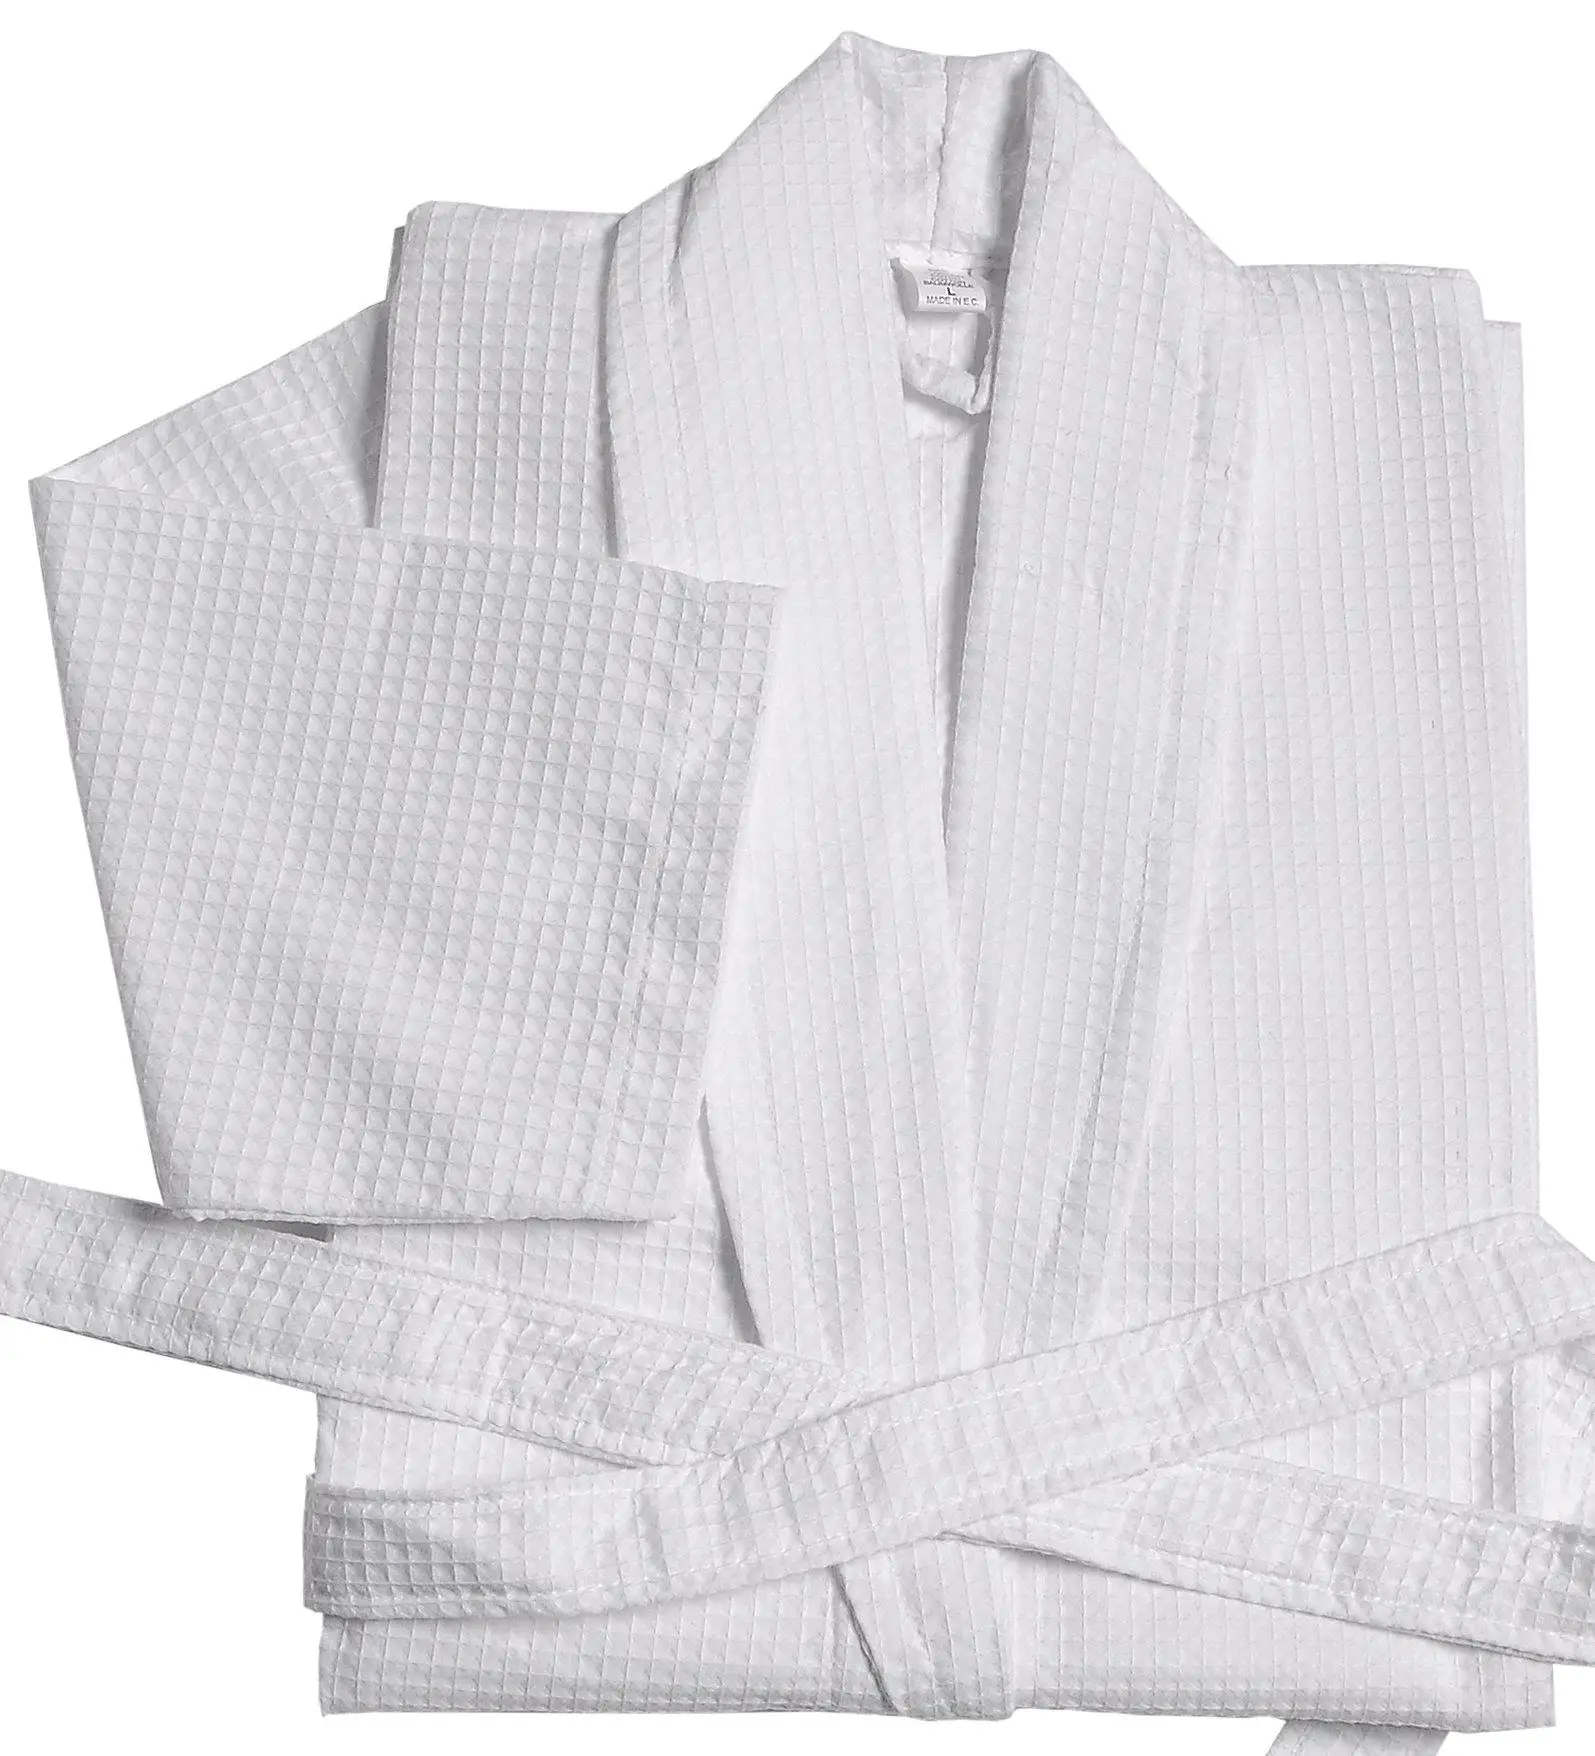 Customised bath robe designer bath robe bath robes luxury white bathrobes towel for hotel